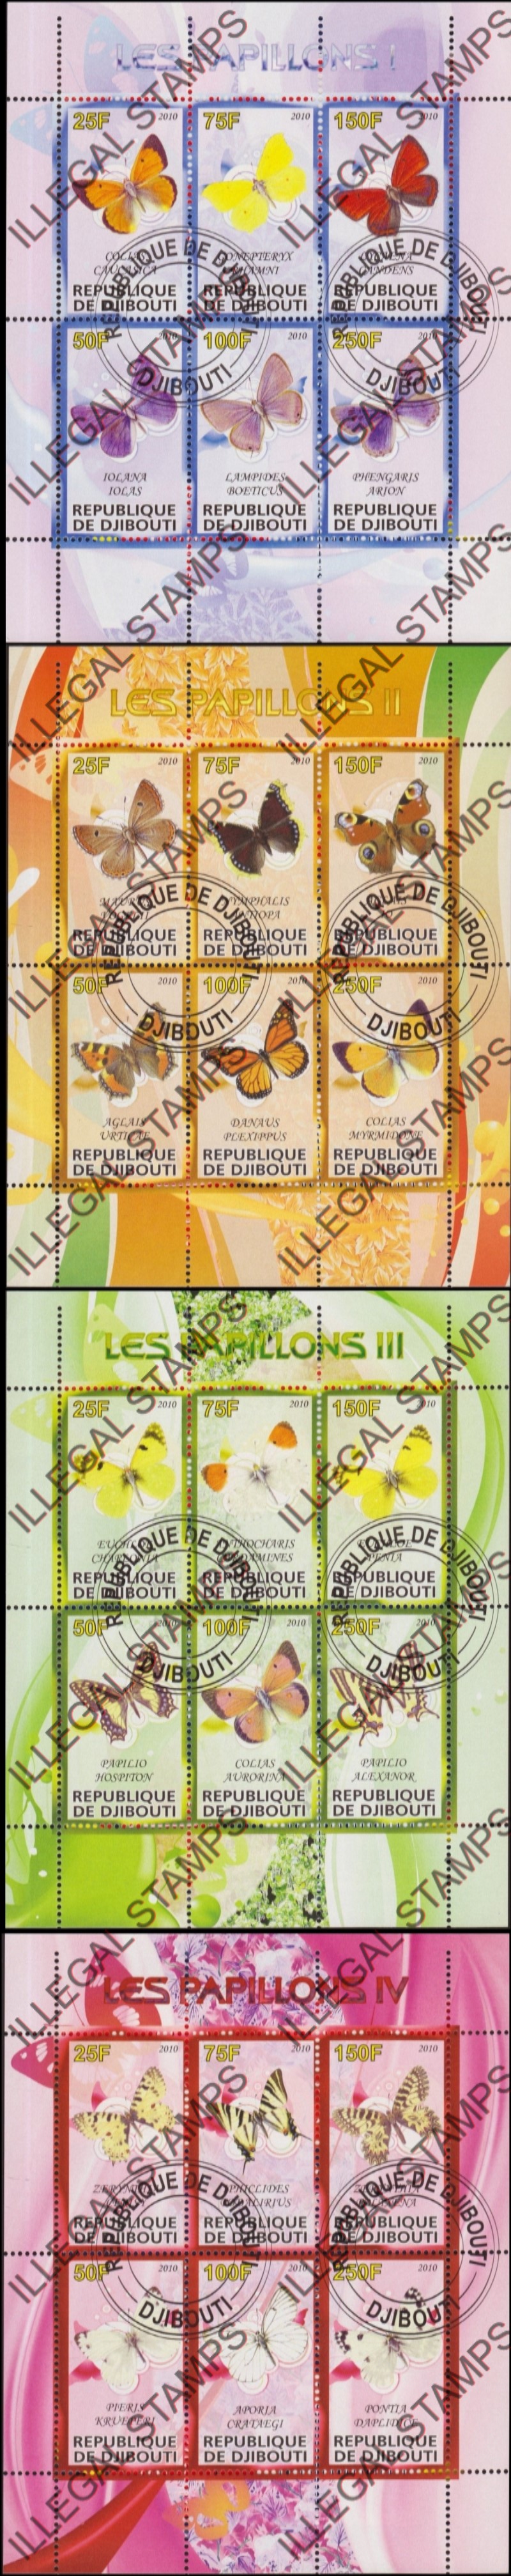 Djibouti 2010 Butterflies Illegal Stamp Sheetlets of 6